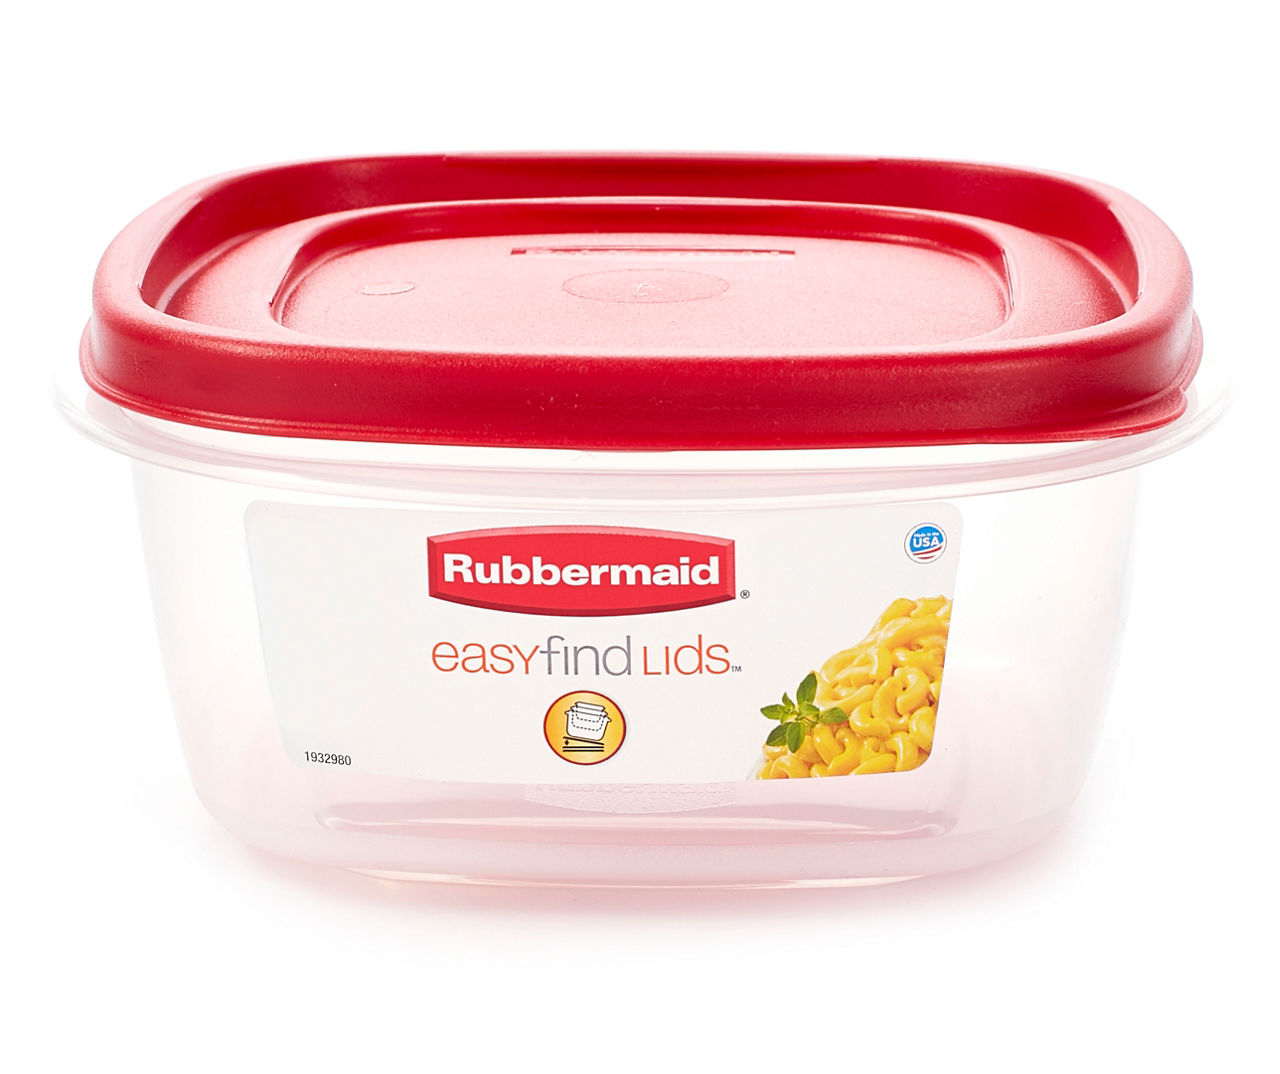 Rubbermaid - Rubbermaid, Premier - Container + Lid, 5 Cups